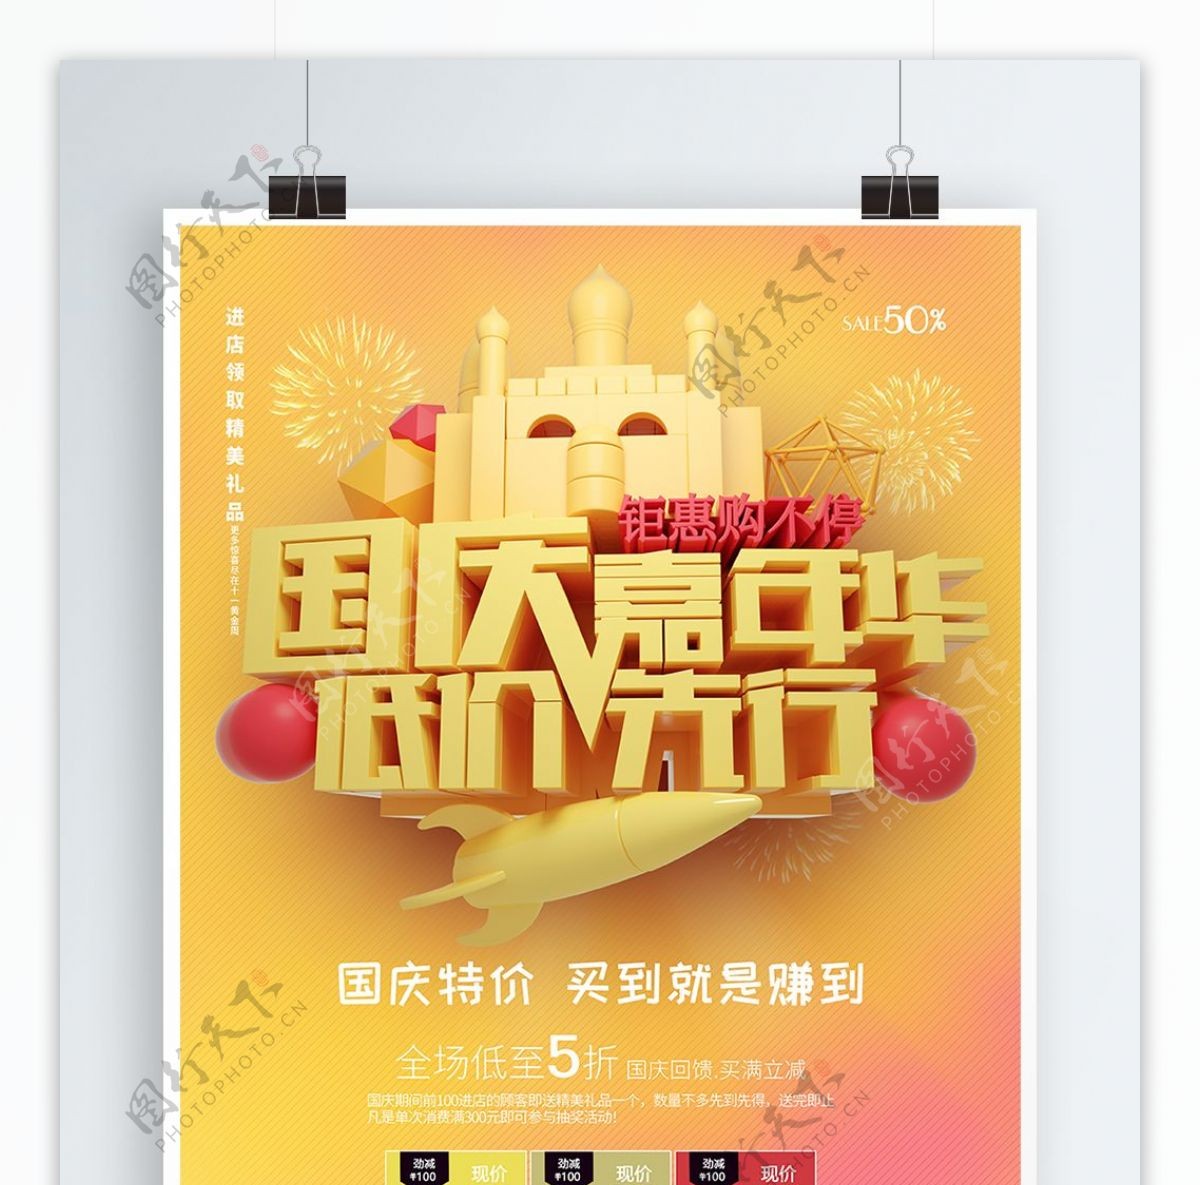 C4D黄色国庆嘉年华低价先行促销海报